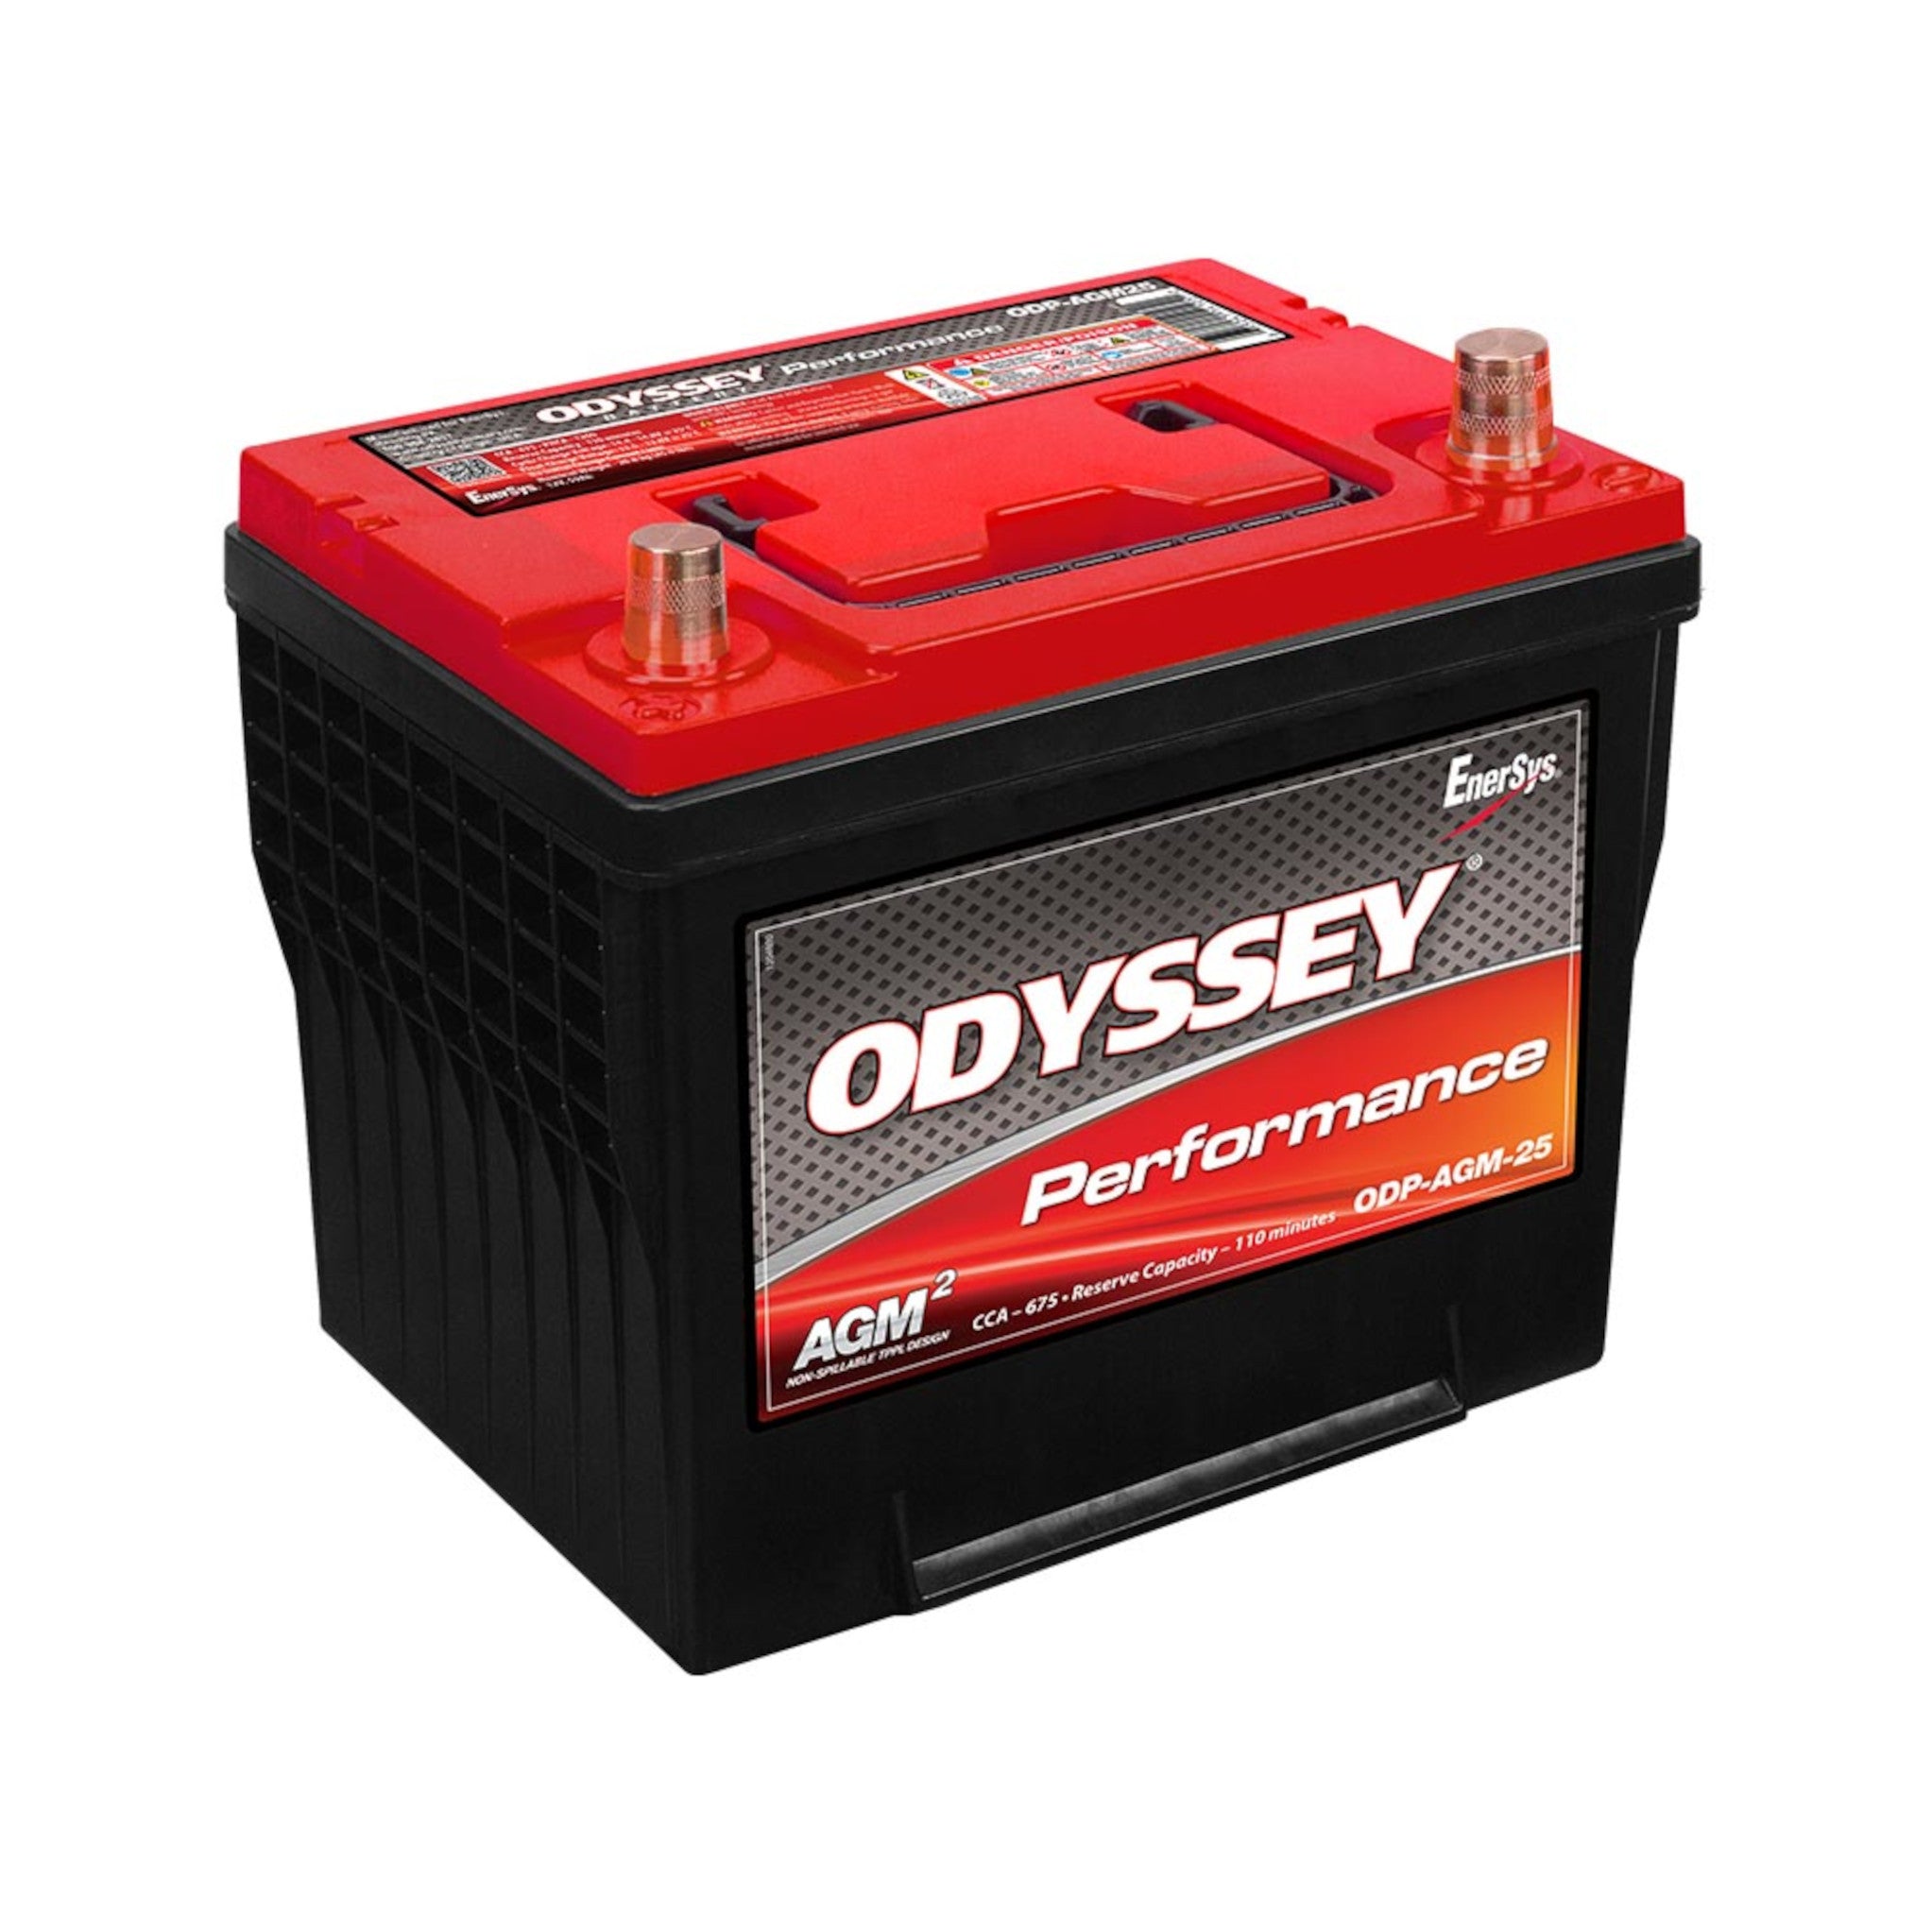 Odyssey ODP-AGM25 12V Group 25 AGM Truck Battery